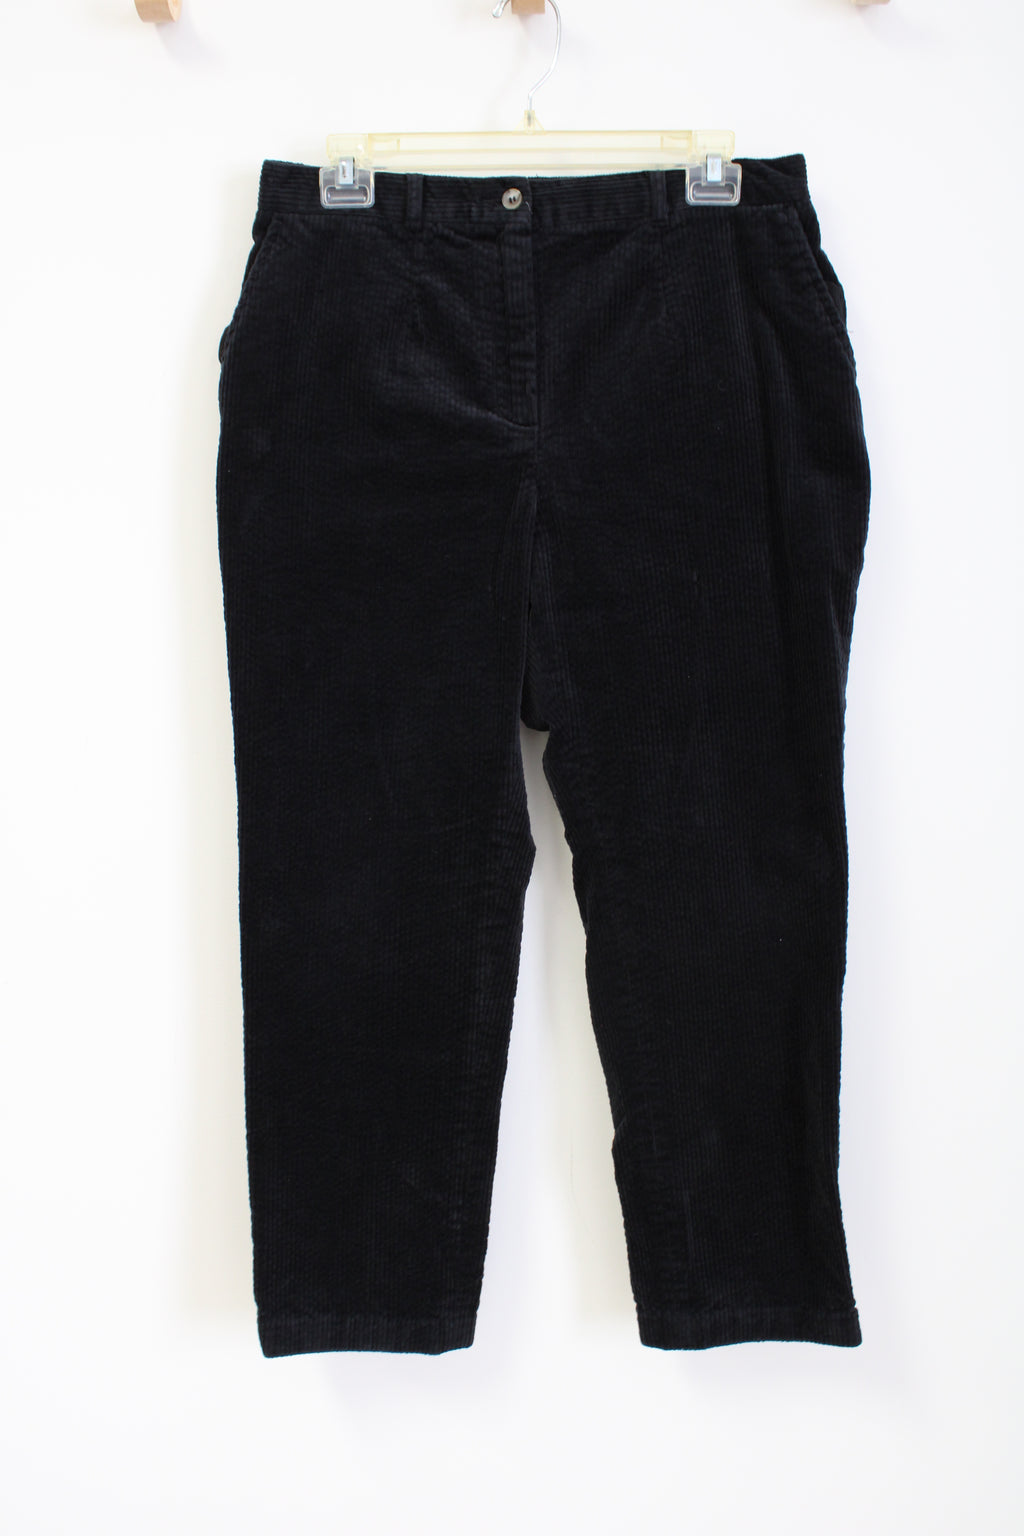 Appleseed's Black Corduroy Pant | 12 Petite